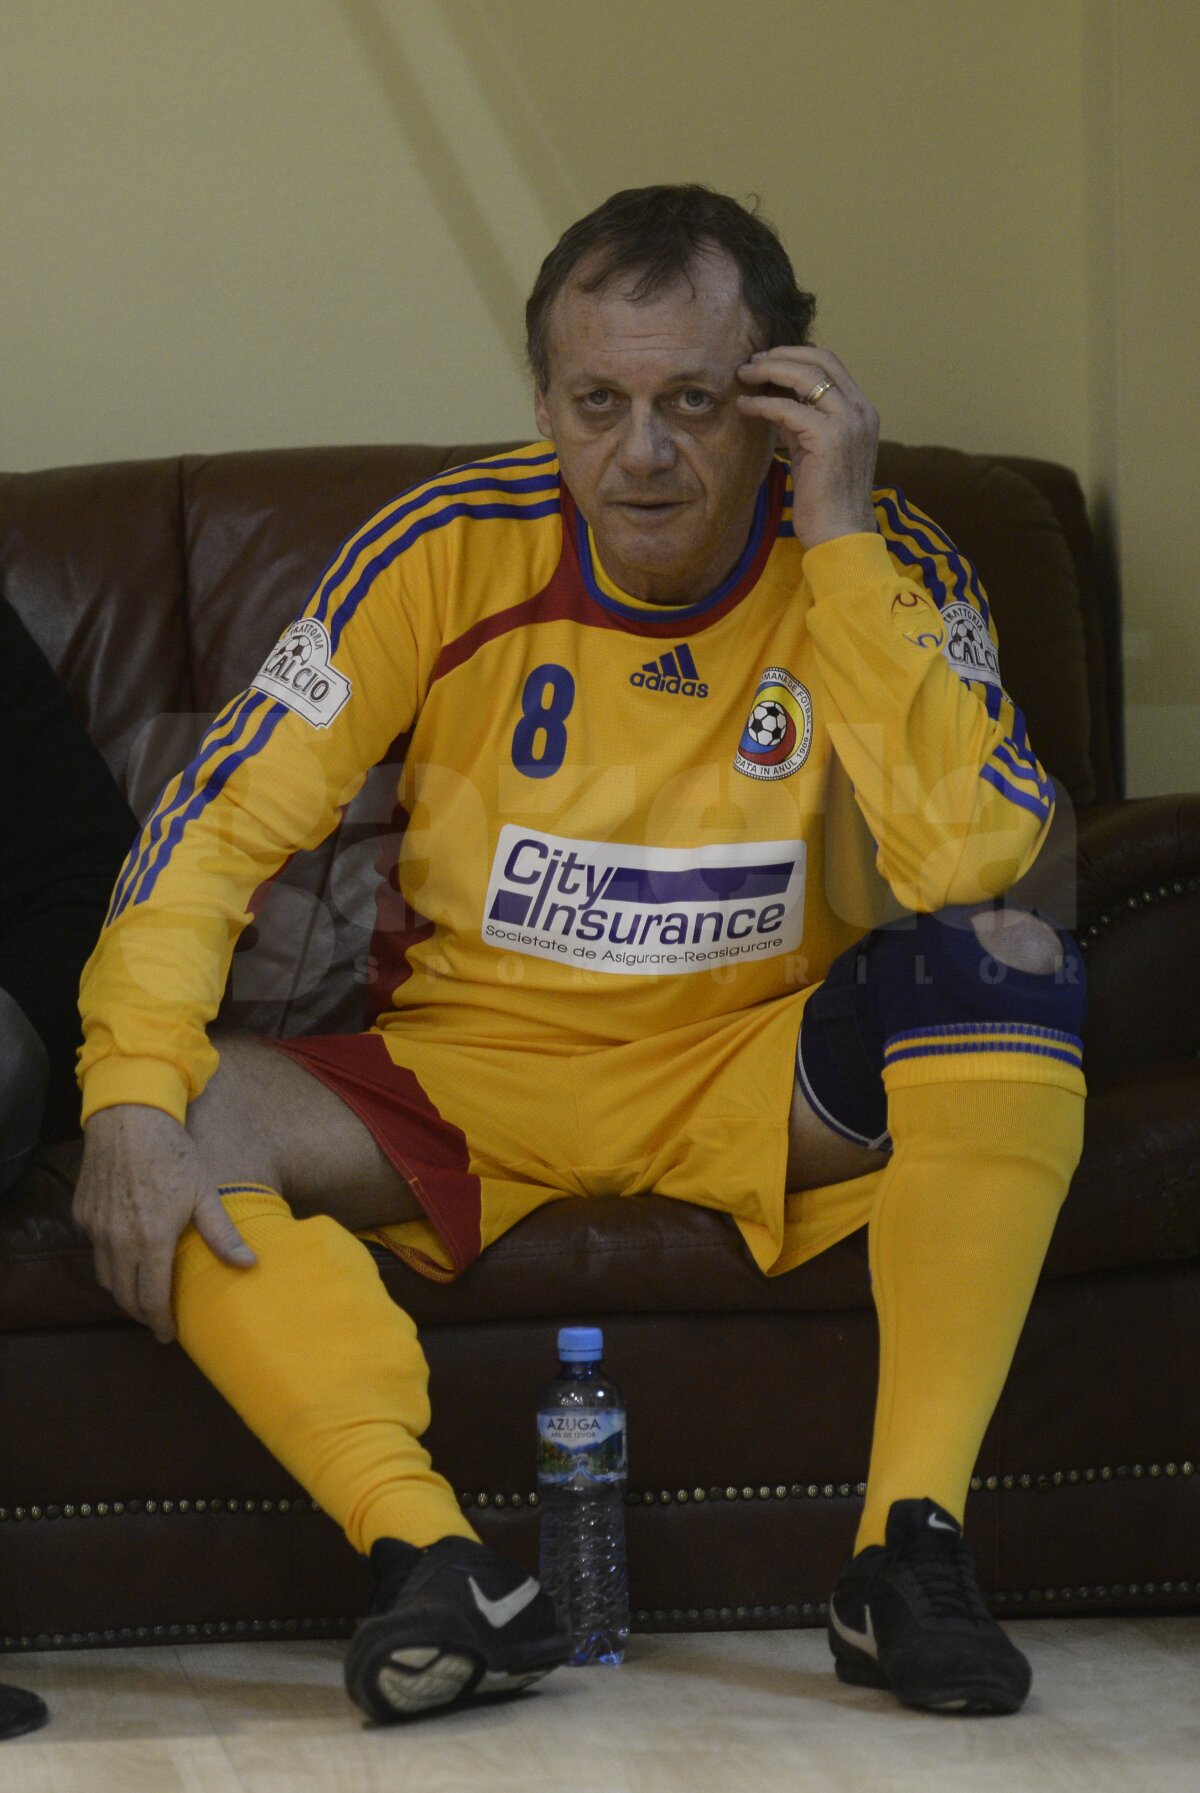 FOTO Italia - România la old-boys, transformat în ... "Galbeni" contra "Albi"! Doar un campion mondial prezent la joc